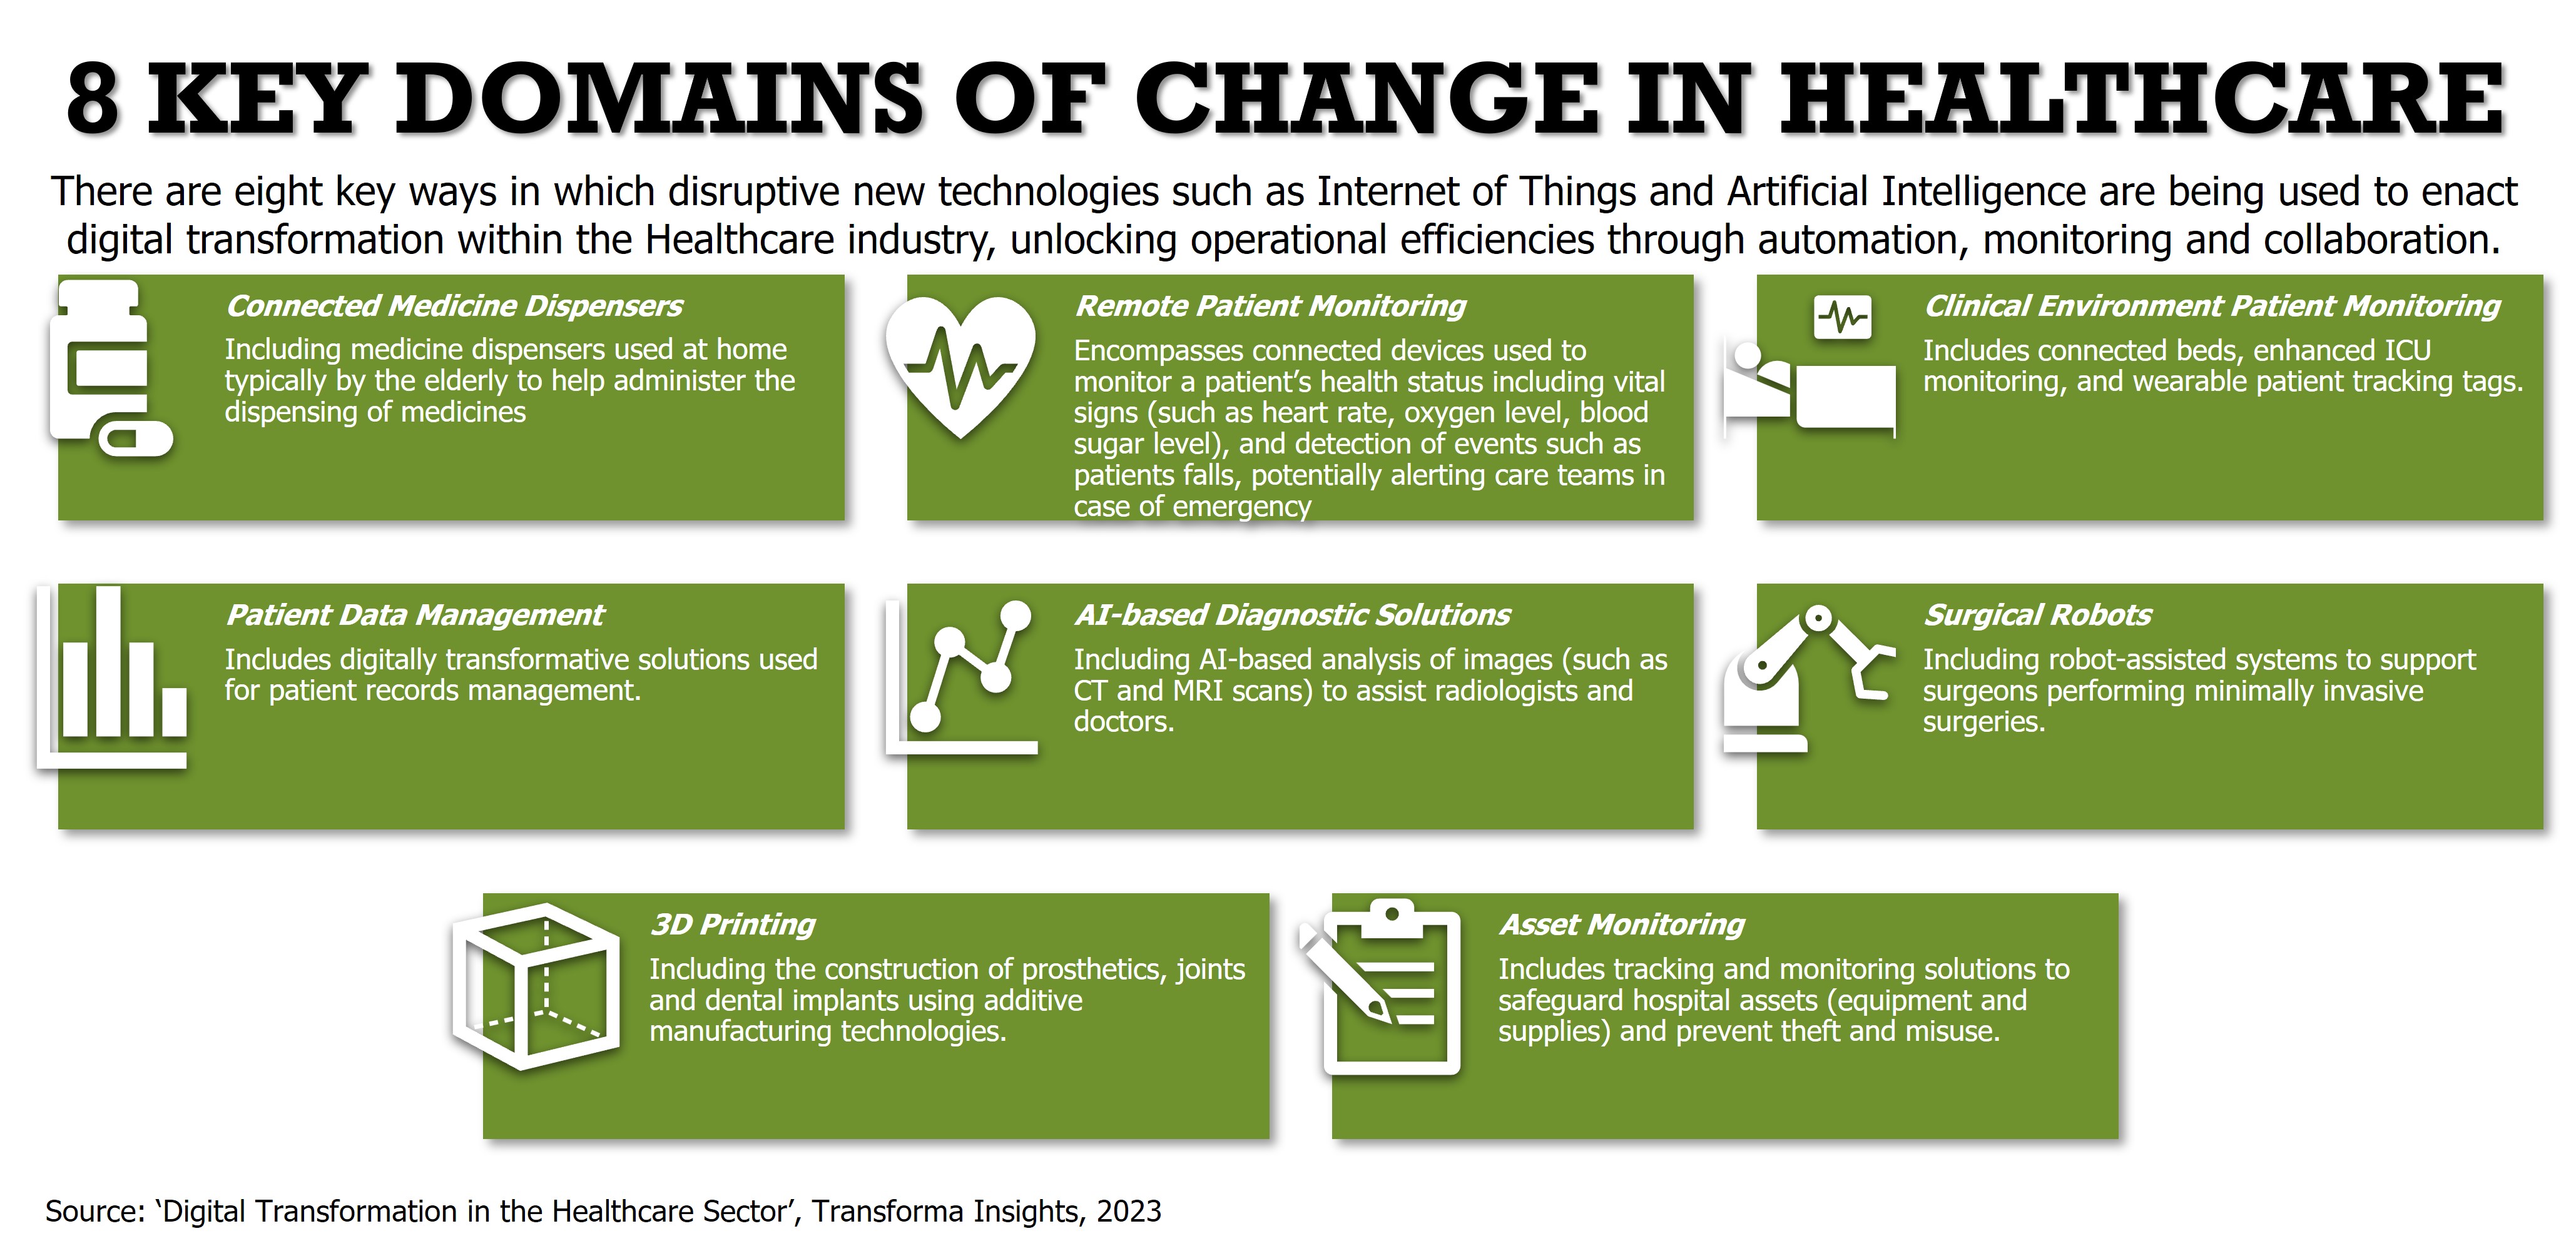 Domains of change healthcare.jpg